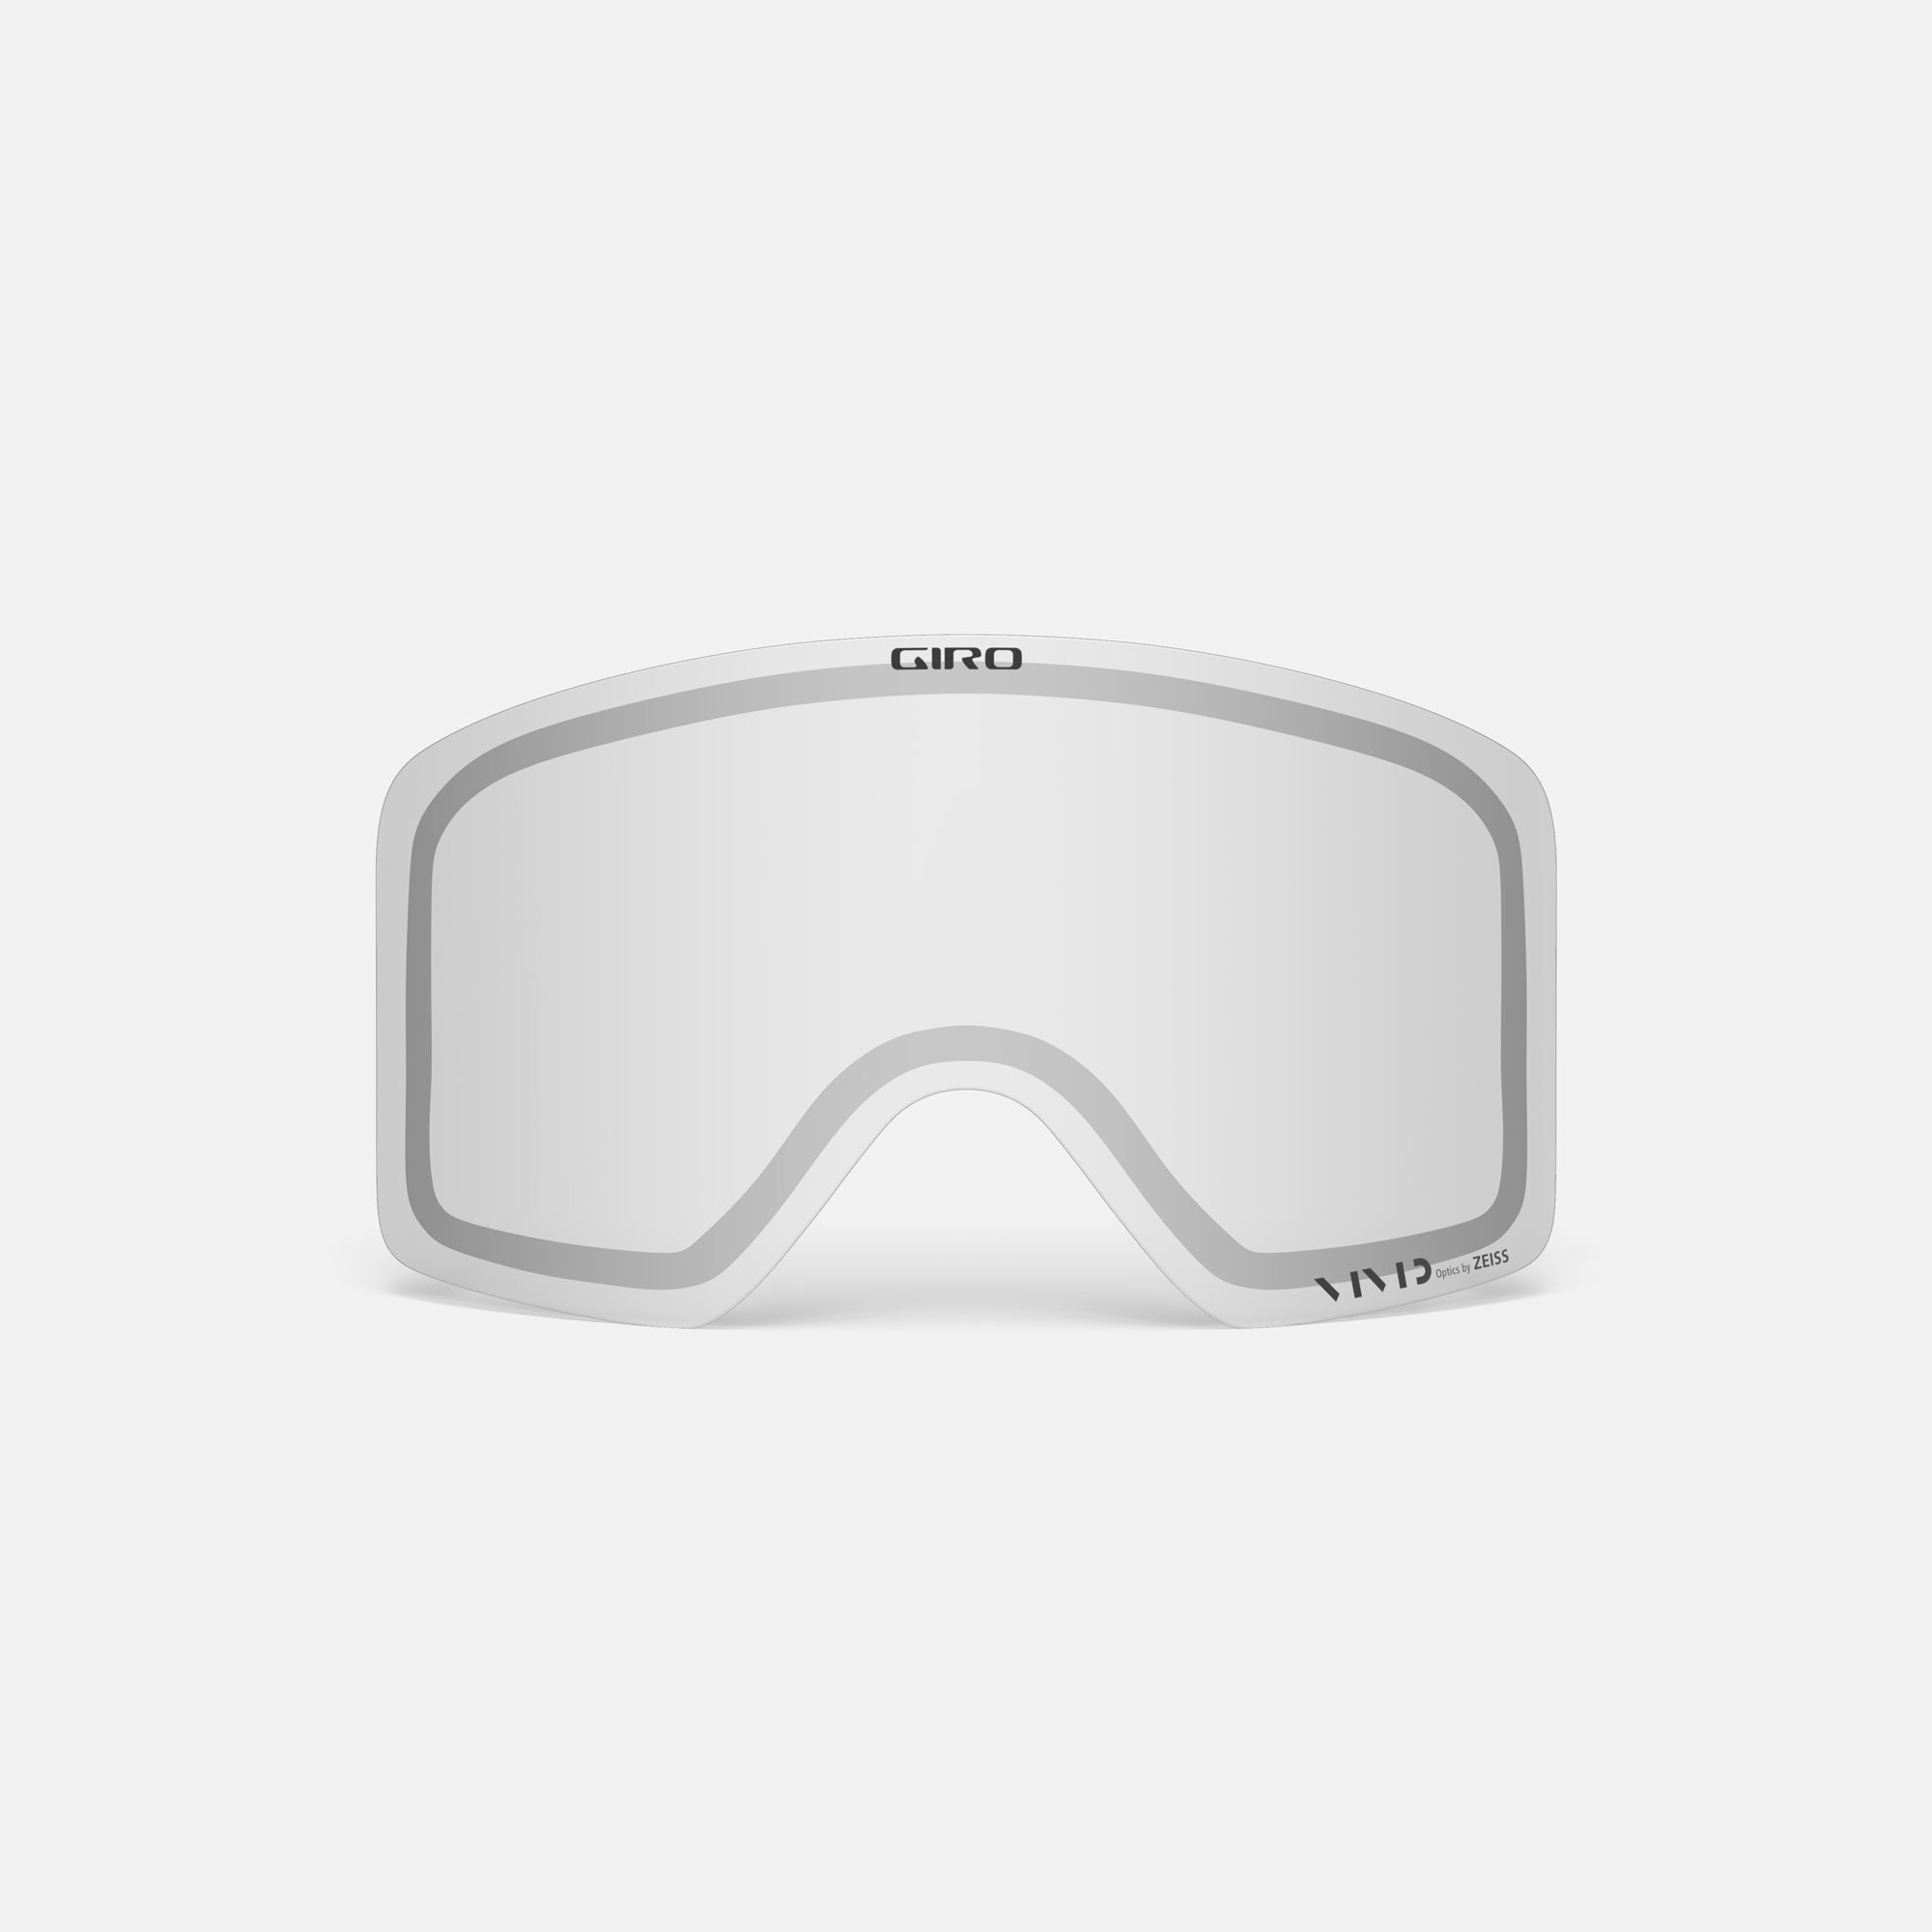 Giro Cruz/Roam/Moxie Replacement Lens Clear